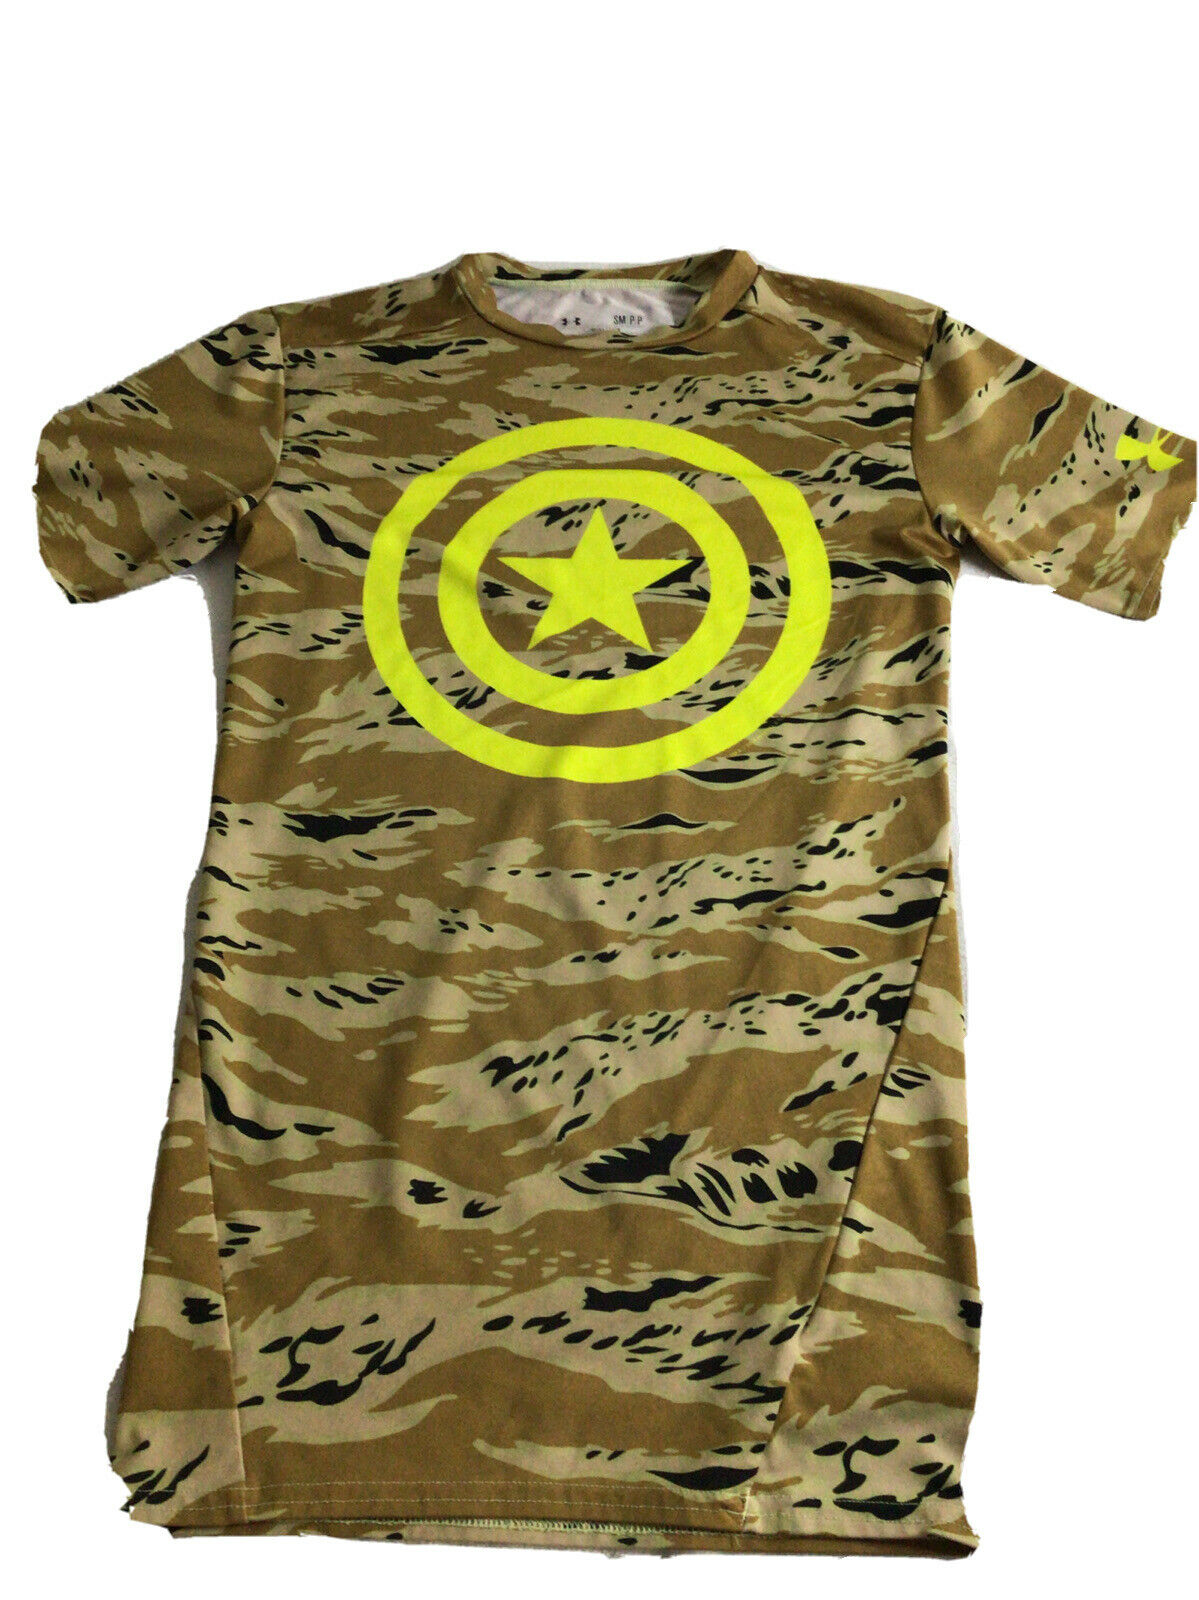 Under Armour Camo Heat Gear Compression Shirt Mens Size L Marvel Captain America